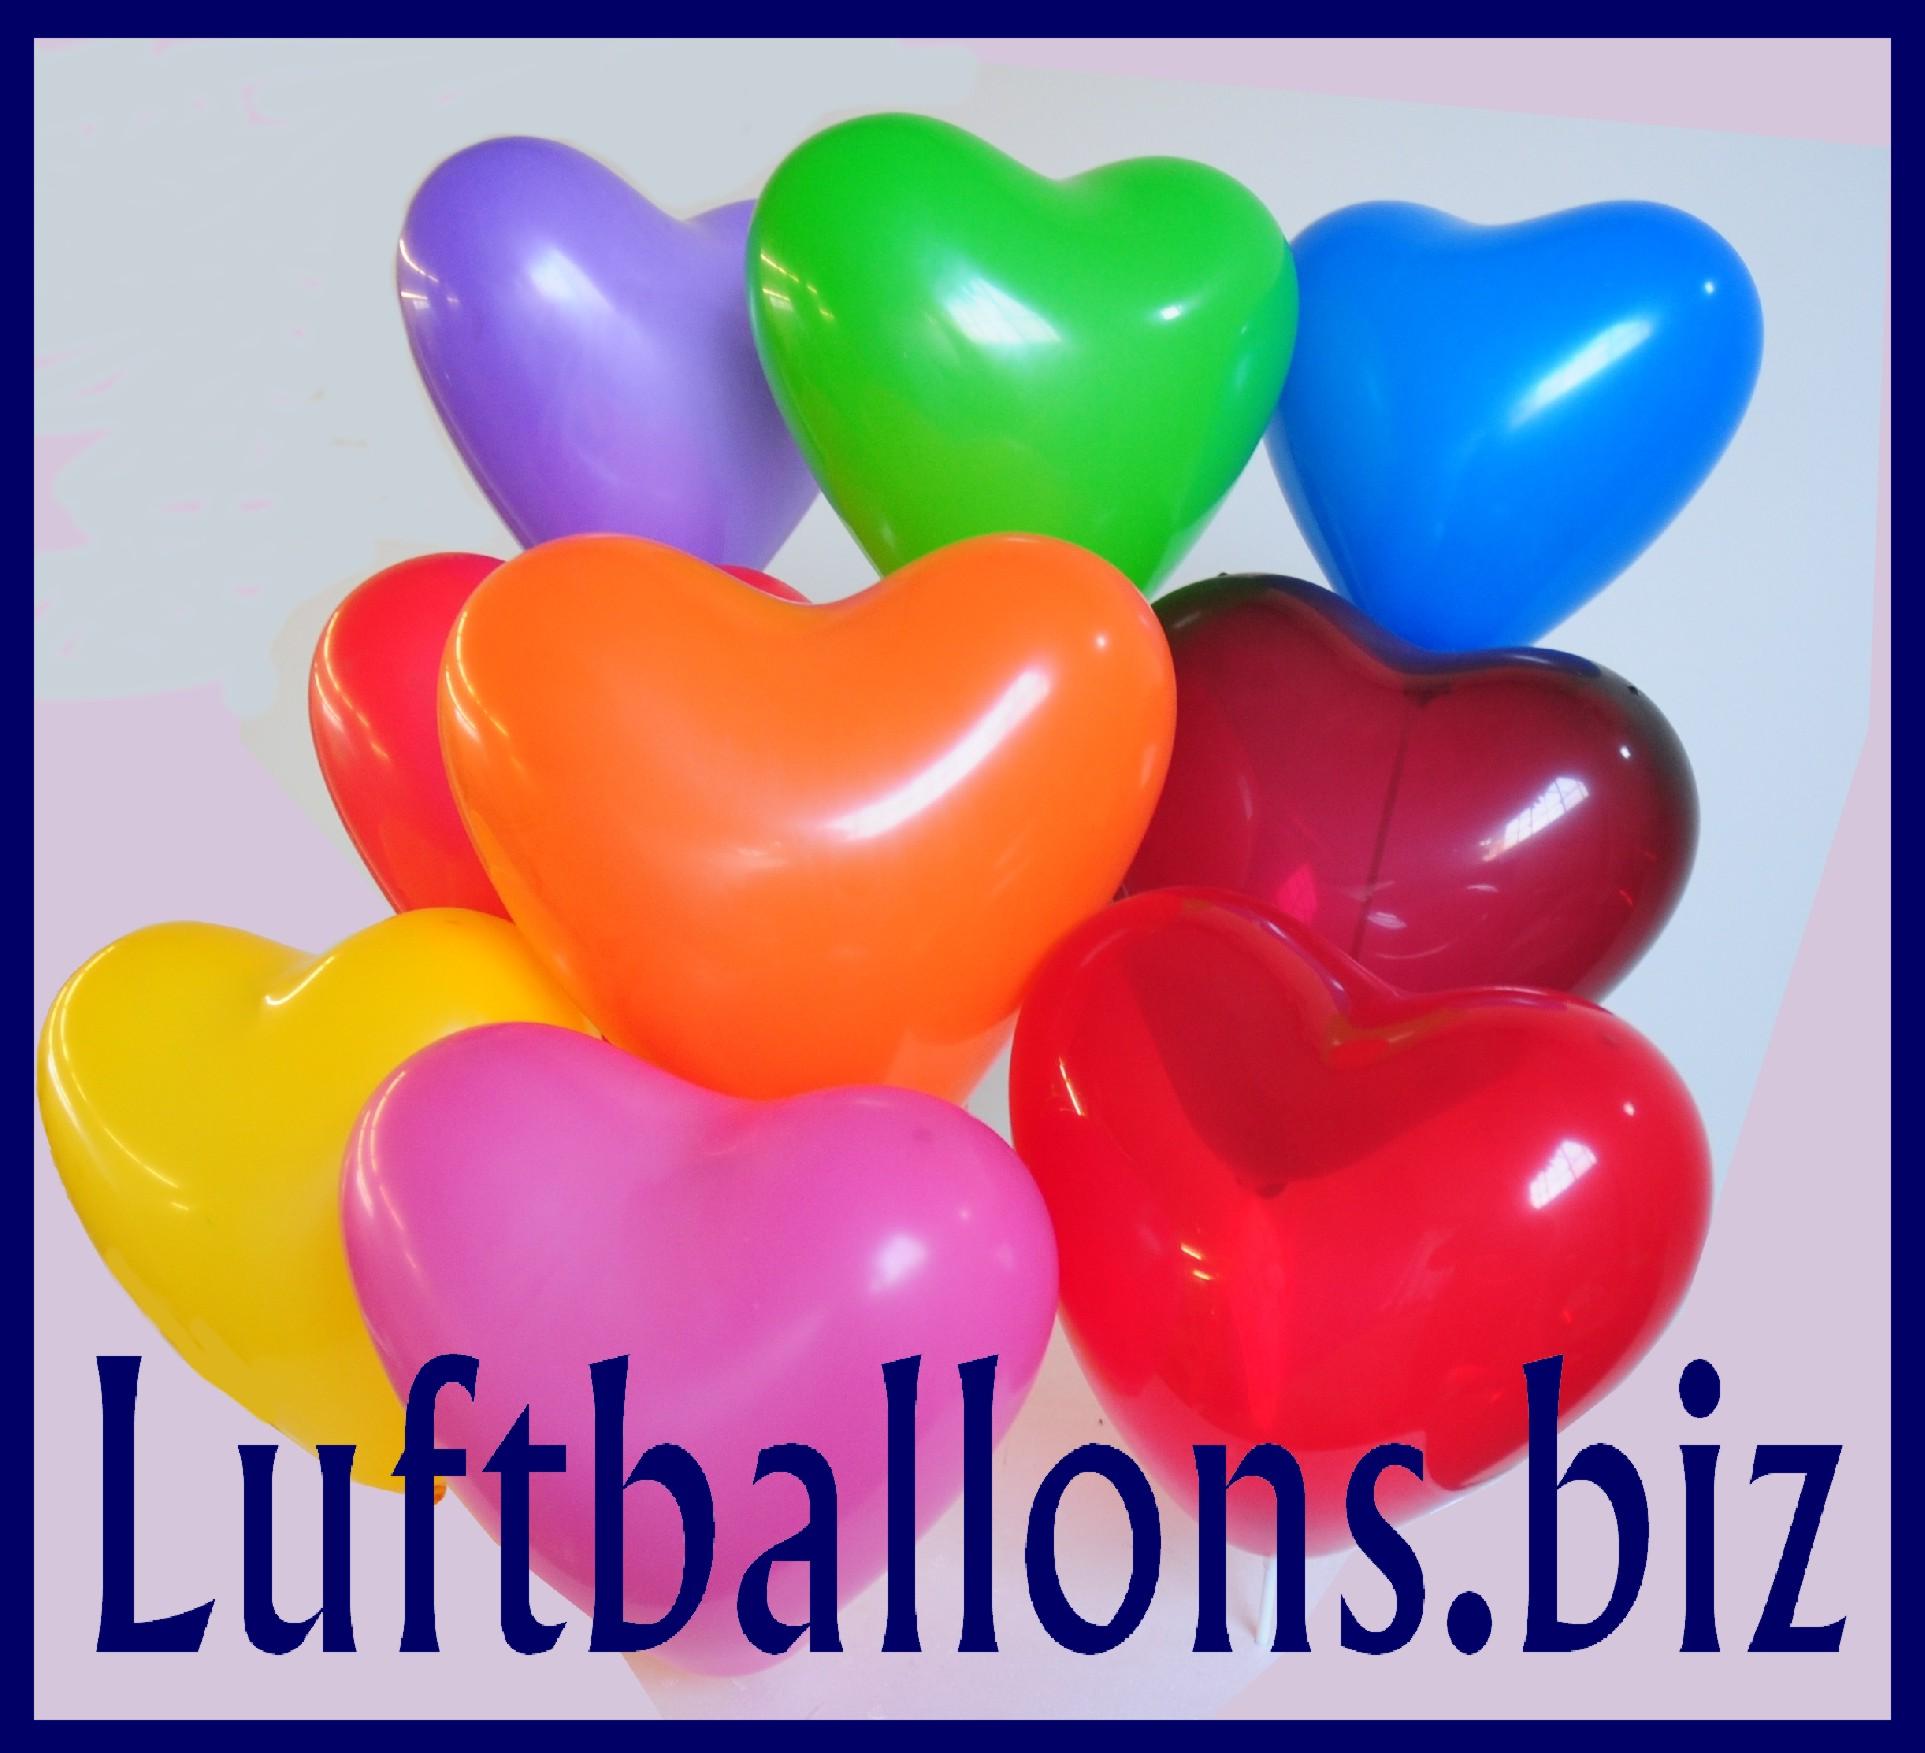 Luftballons bei Luftballons.biz